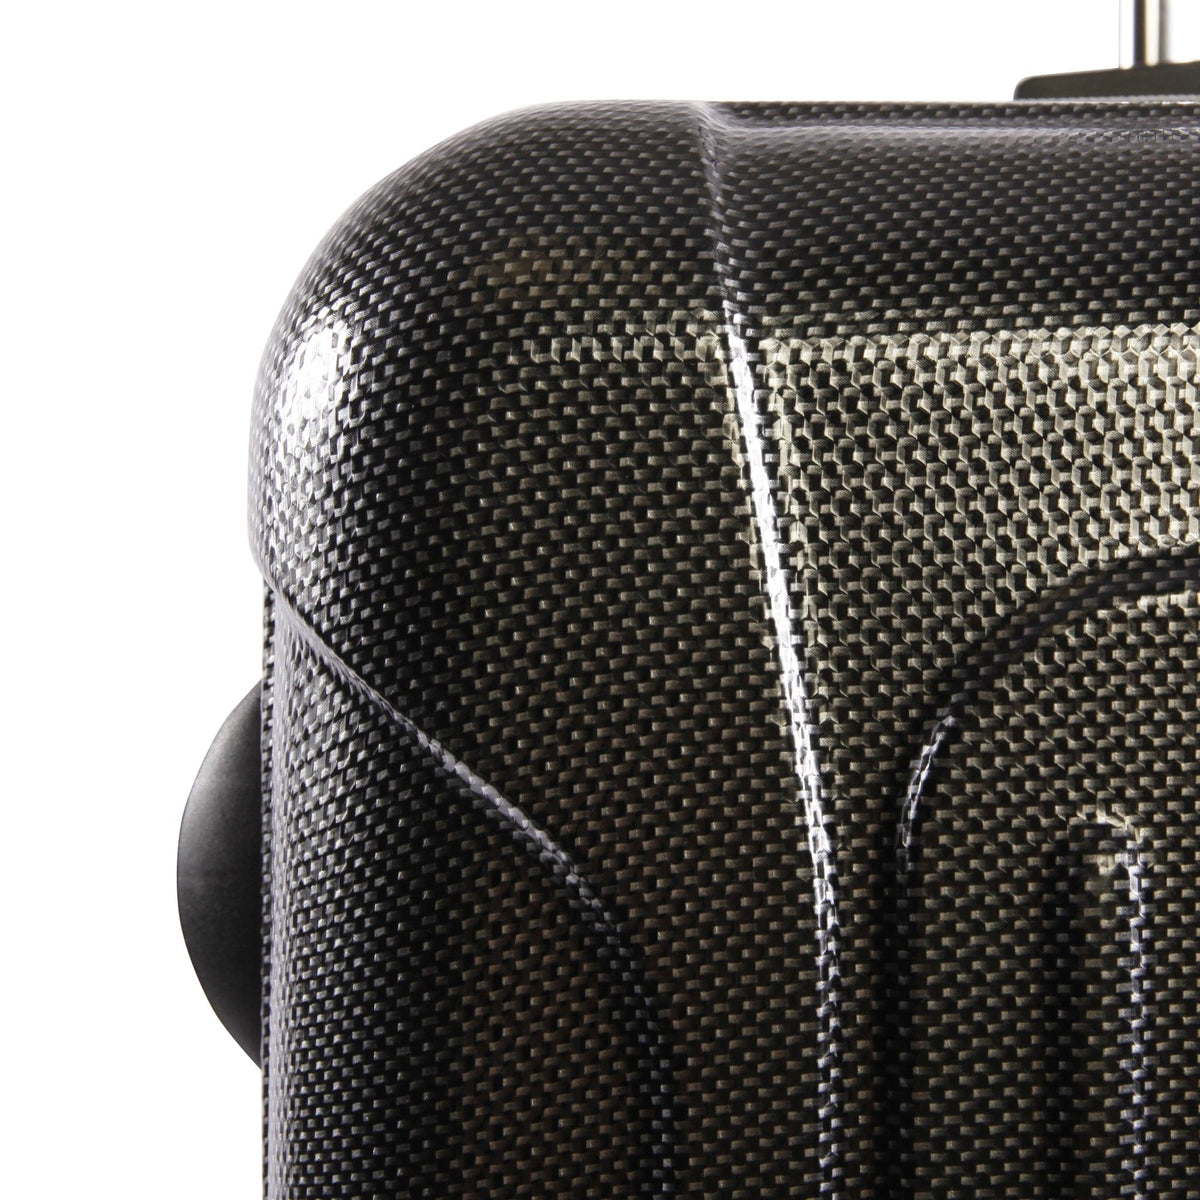 Original Penguin Crest 21" Expandable Hardside Carry-On Spinner Luggage